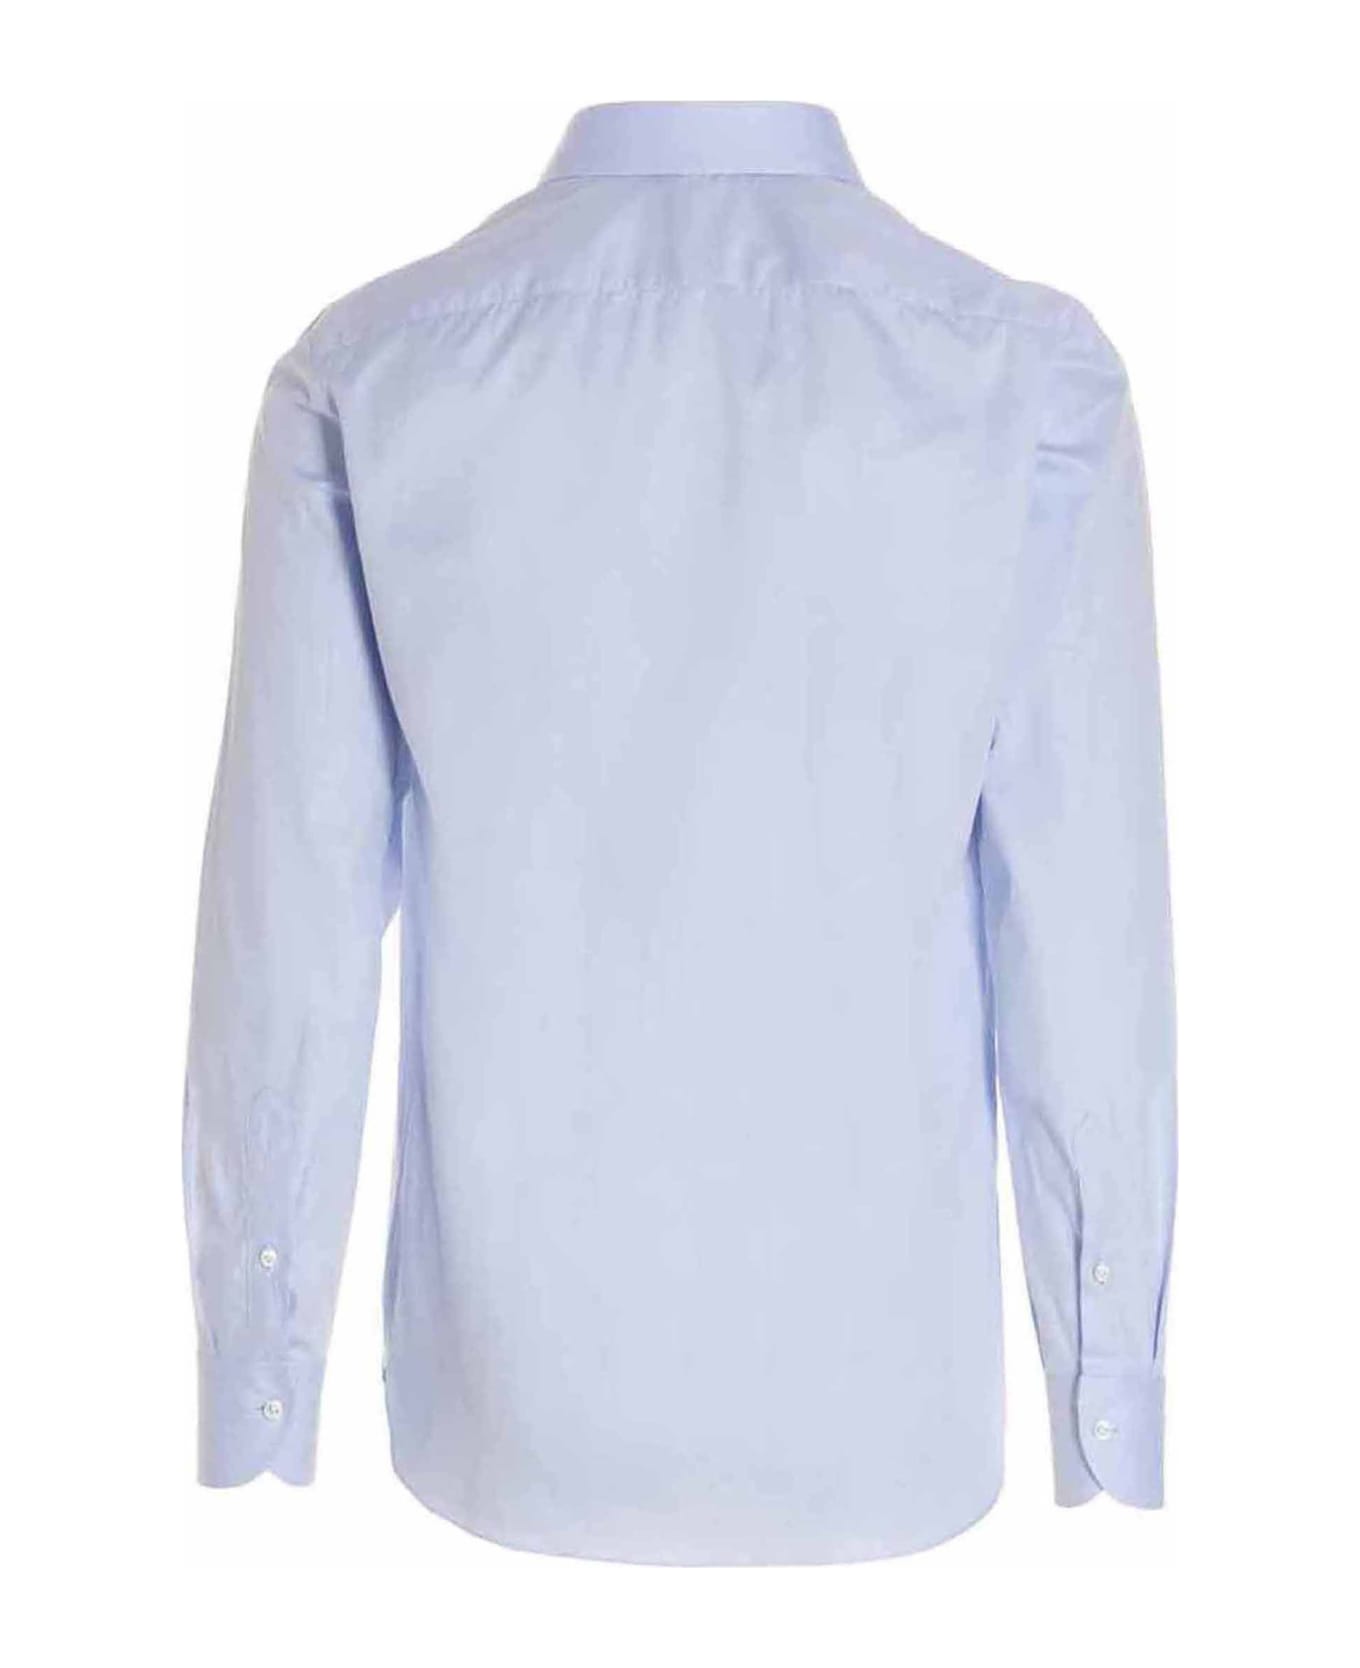 Borriello Napoli 'marechiaro' Shirt - Light Blue